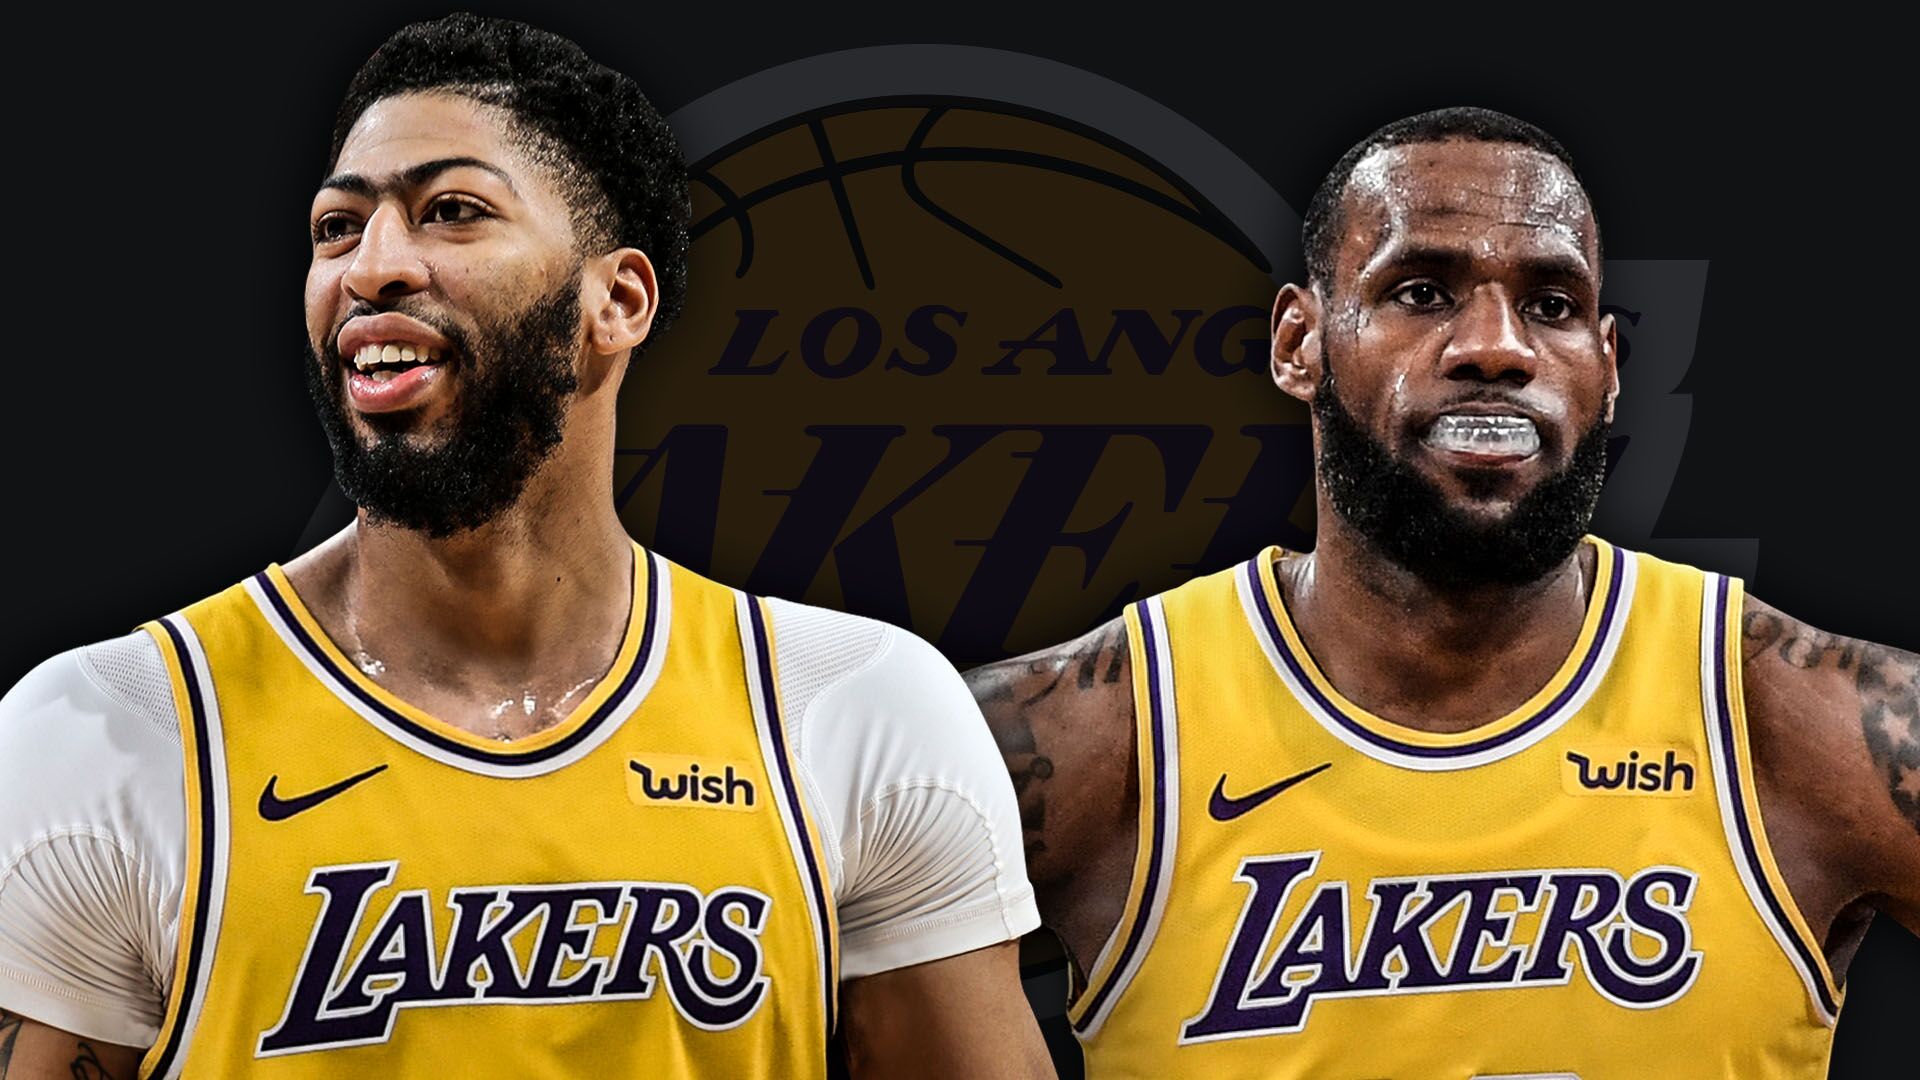 LA Lakers players, Anthony Davis and LeBron James